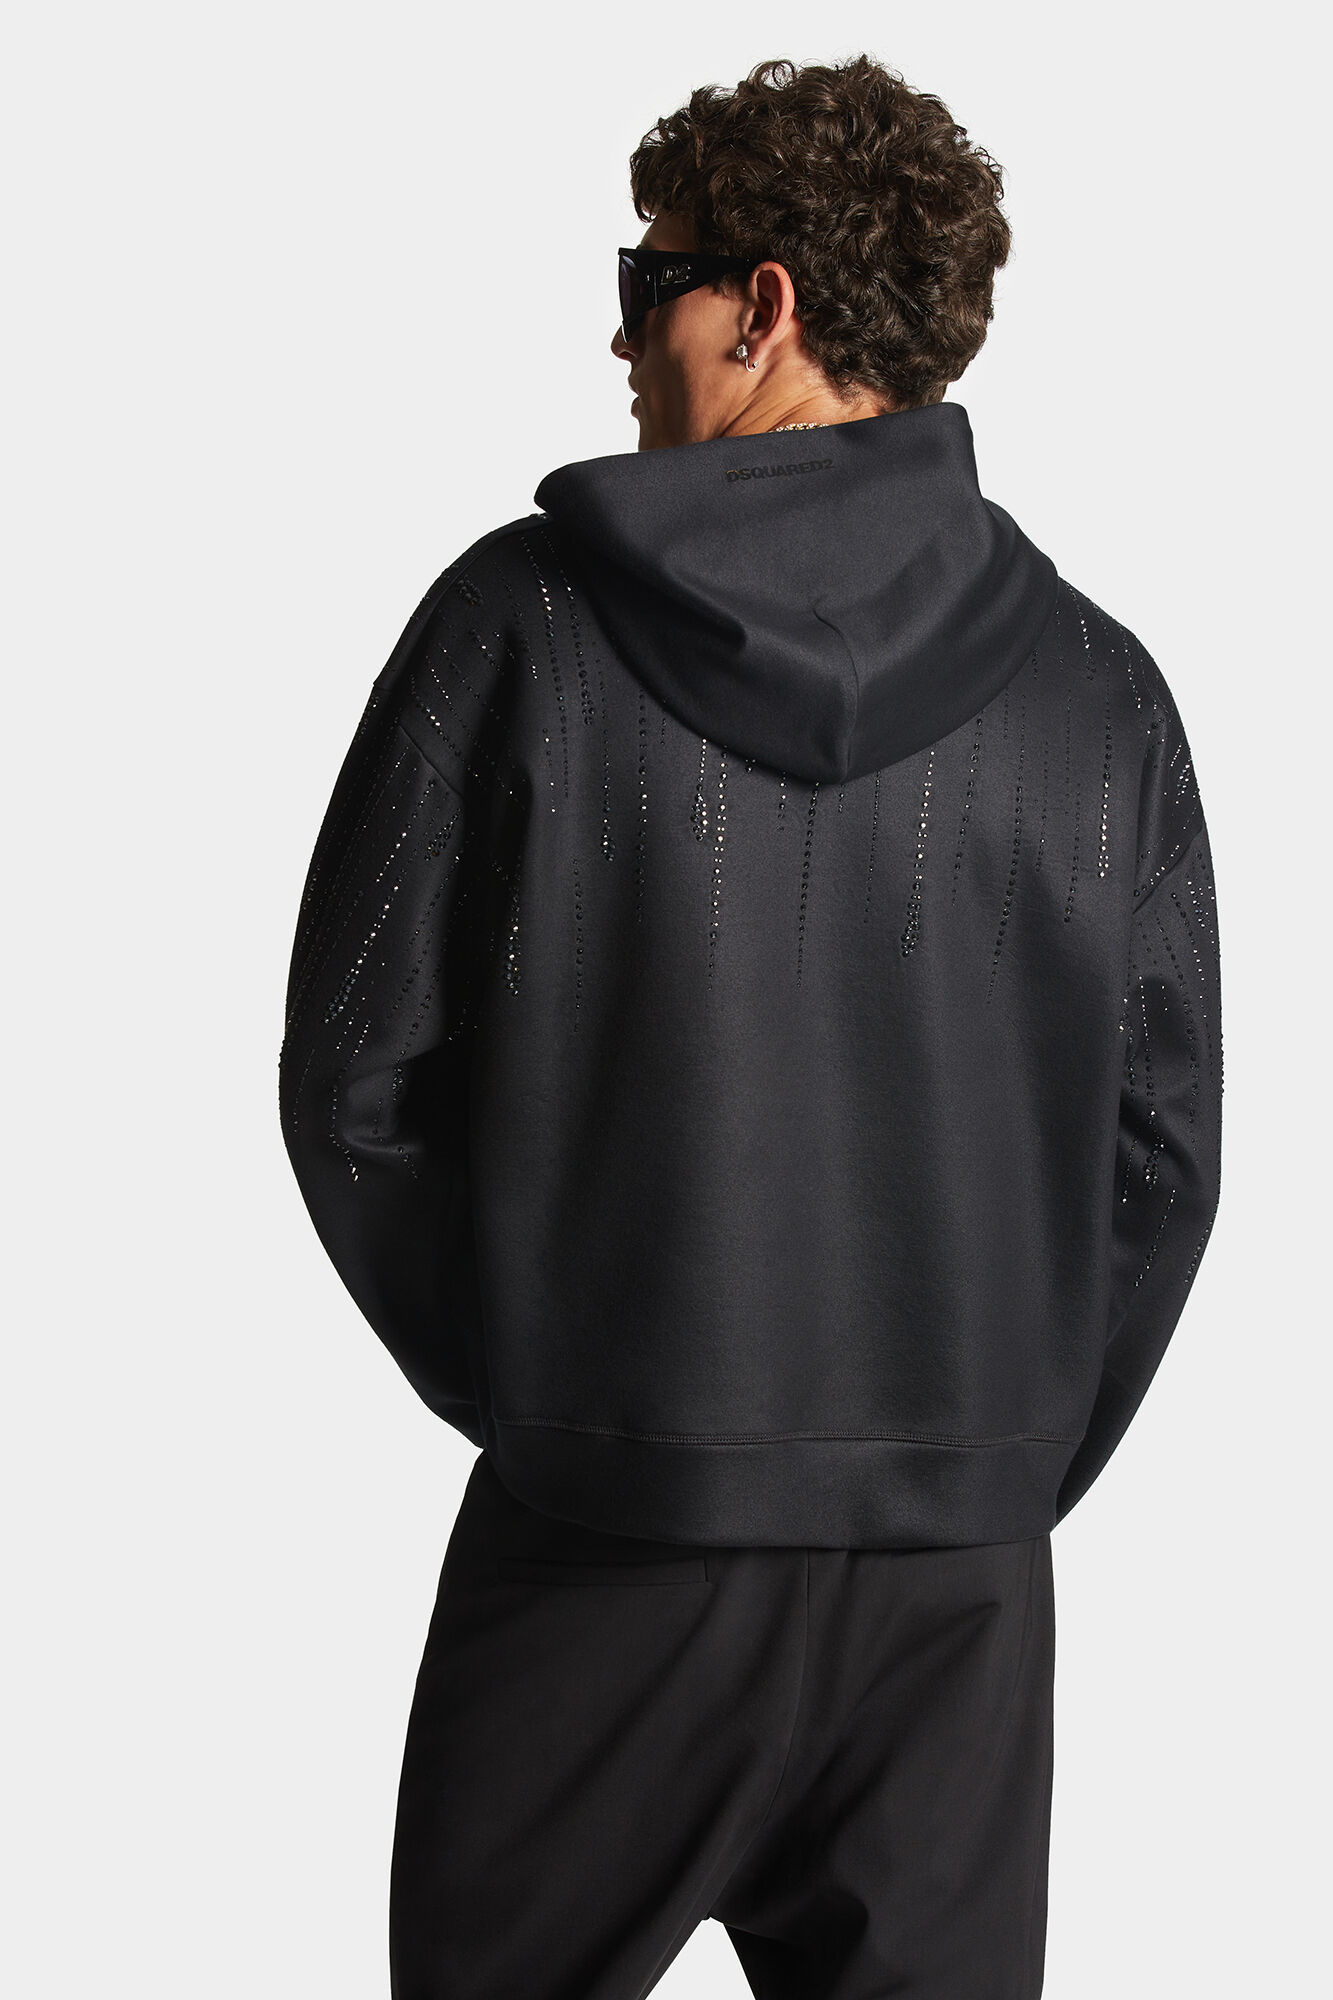 Dsquared2 rhinestone-embellished logo hoodie - Black